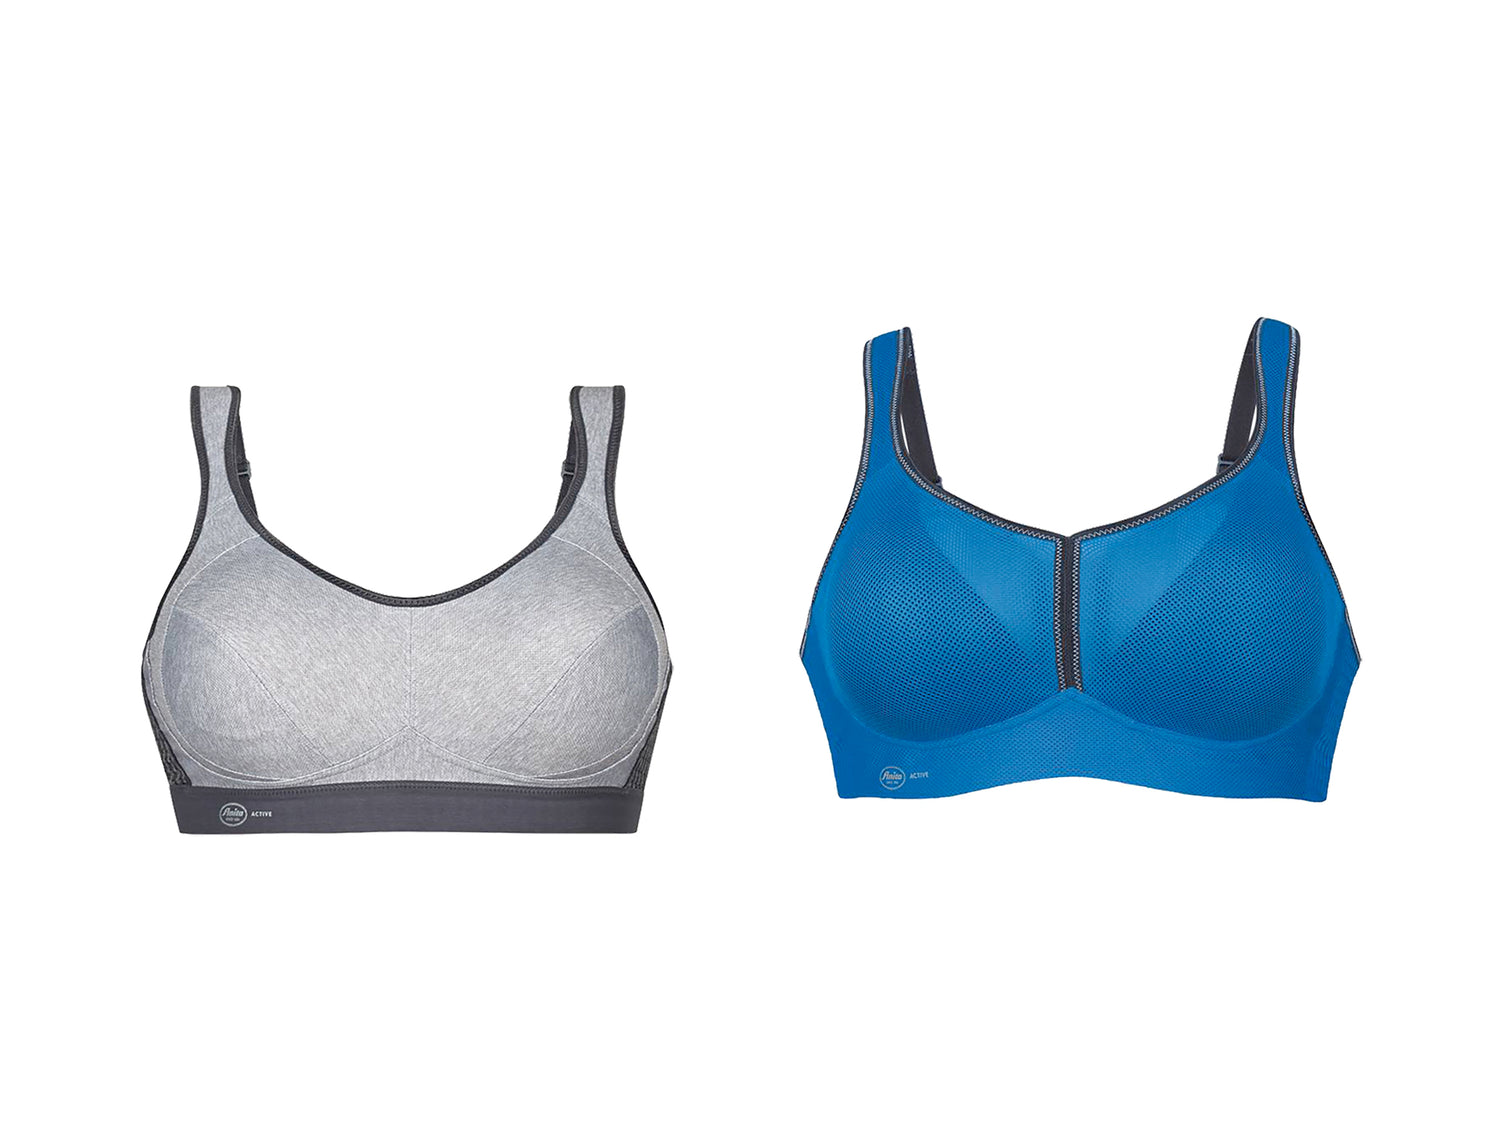 Creating a bra wardrobe 5 simple steps